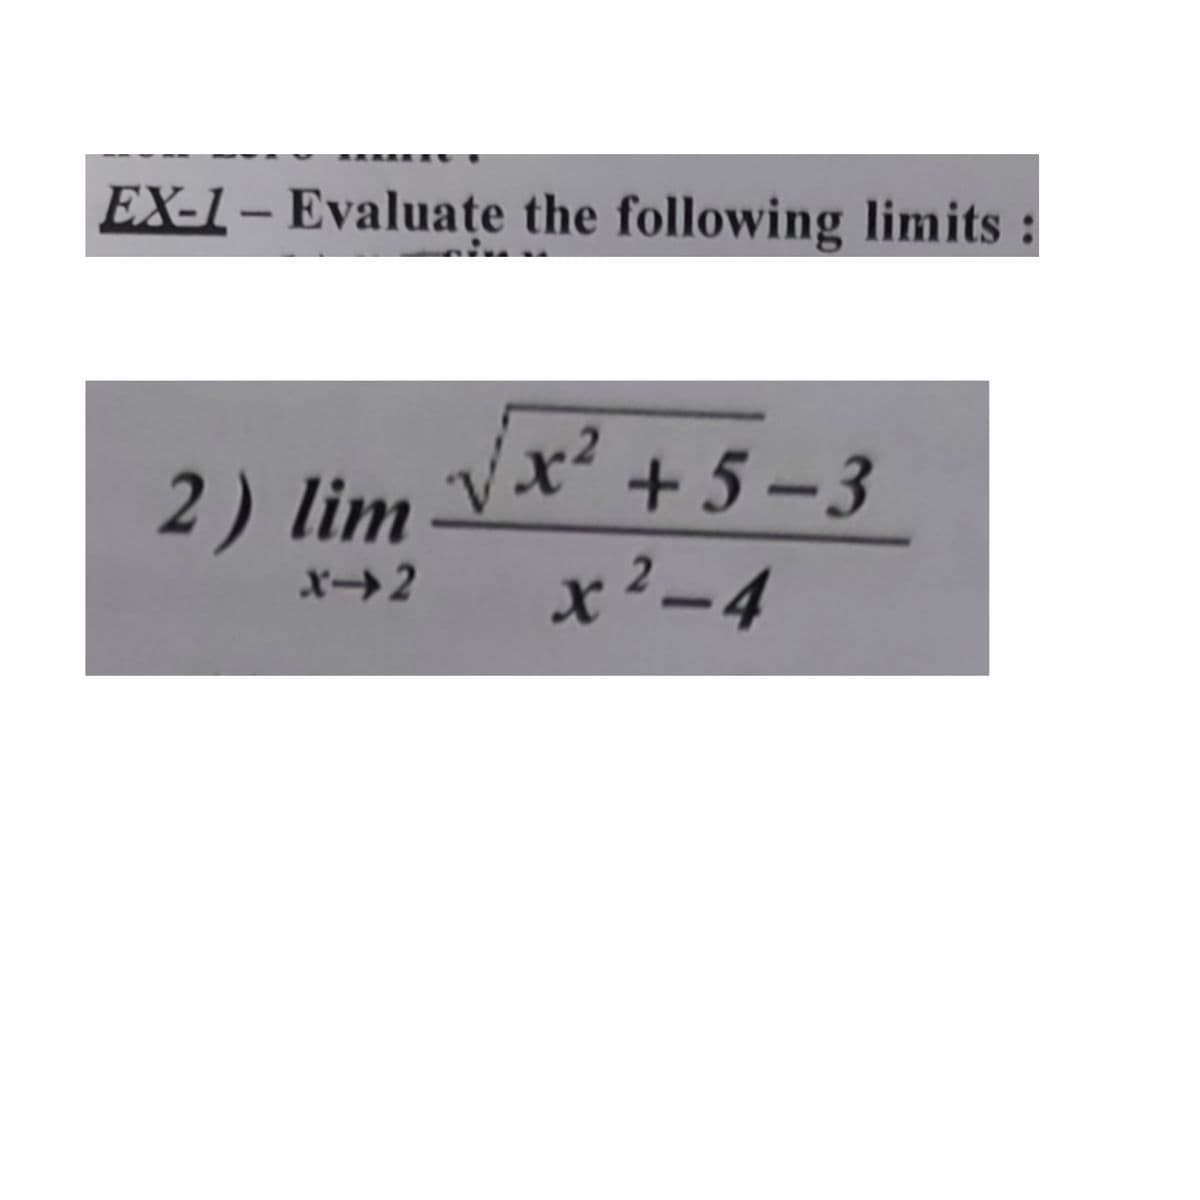 EX-1- Evaluate the following limits:
Vx? + 5 -3
2) lim ♥
x²-4
x→2
